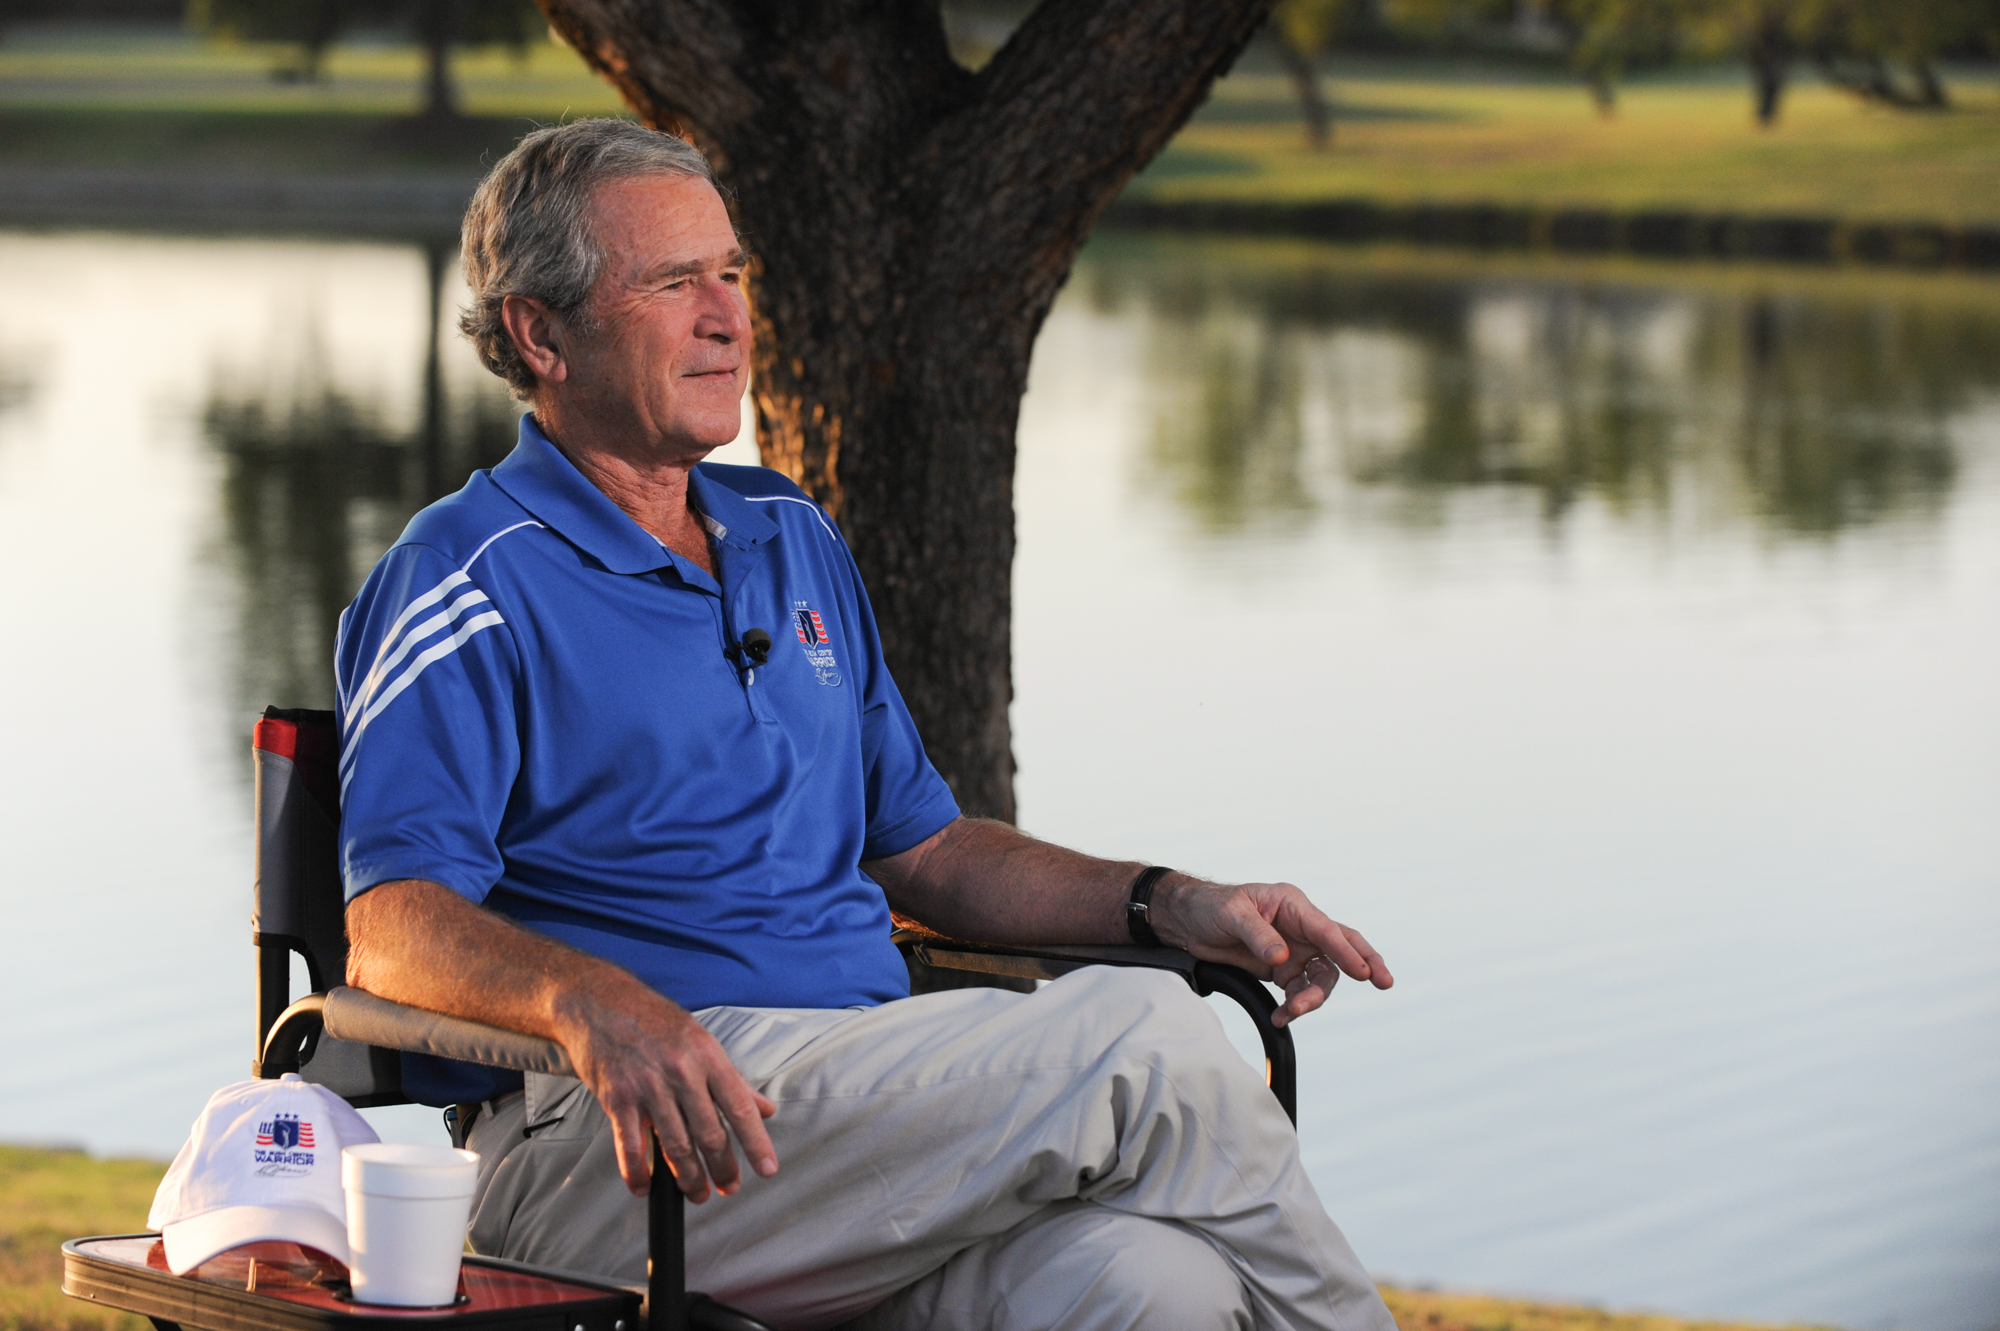 George W. Bush reclines